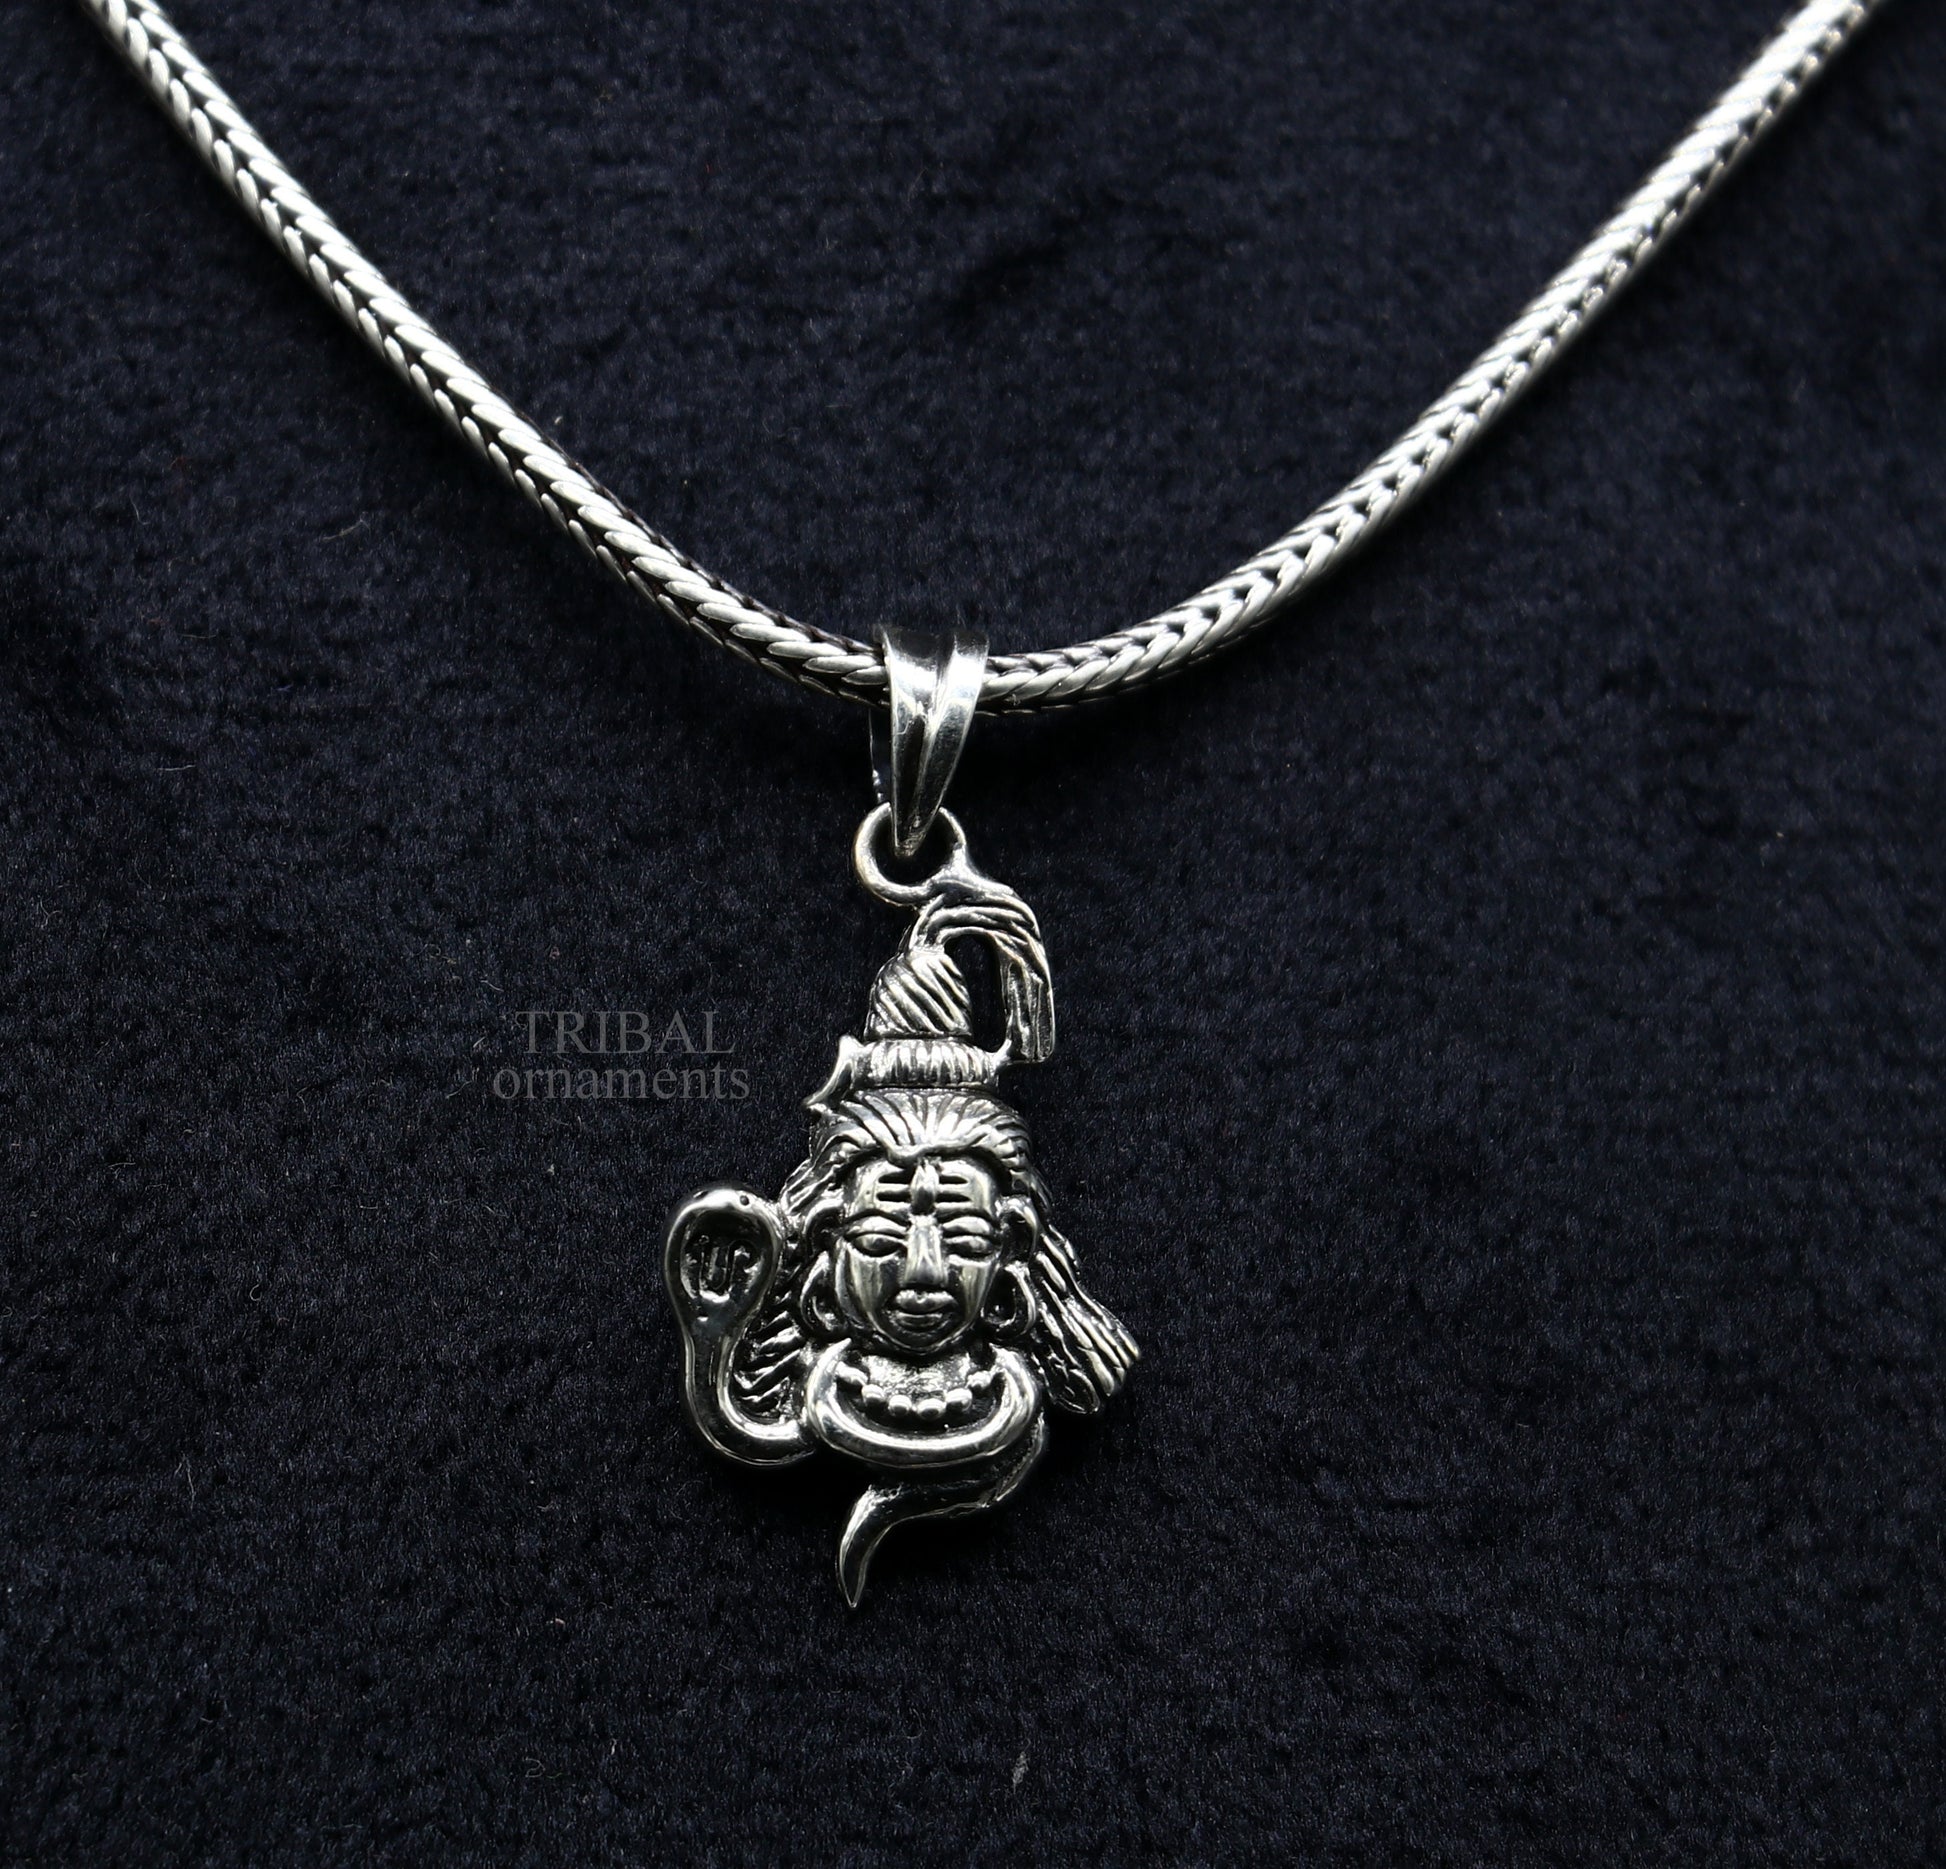 925 sterling silver amazing designer Hindu idol Lord Shiva pendant, excellent gifting unisex locket pendant customized jewelry ssp1647 - TRIBAL ORNAMENTS